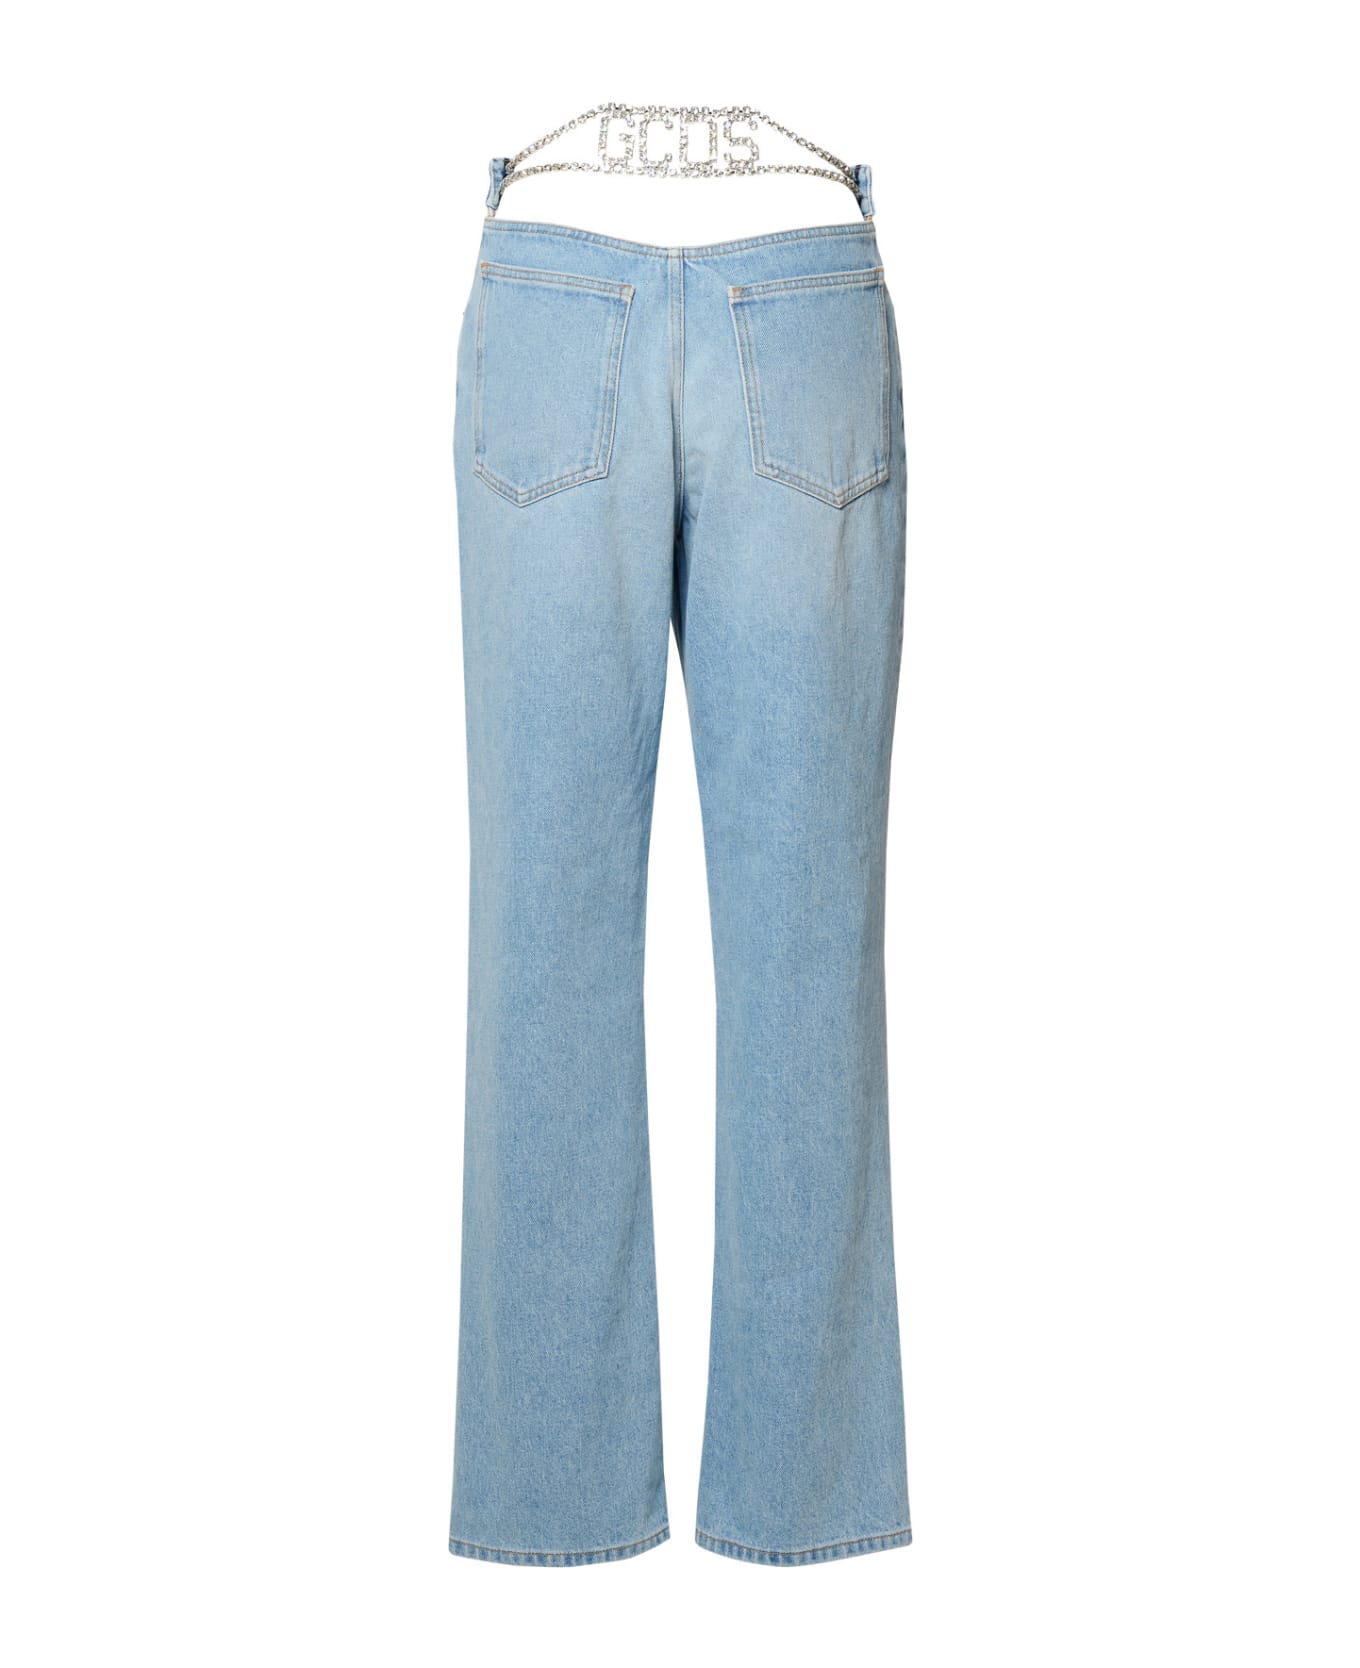 GCDS Light Blue Cotton Jeans - Light Blue